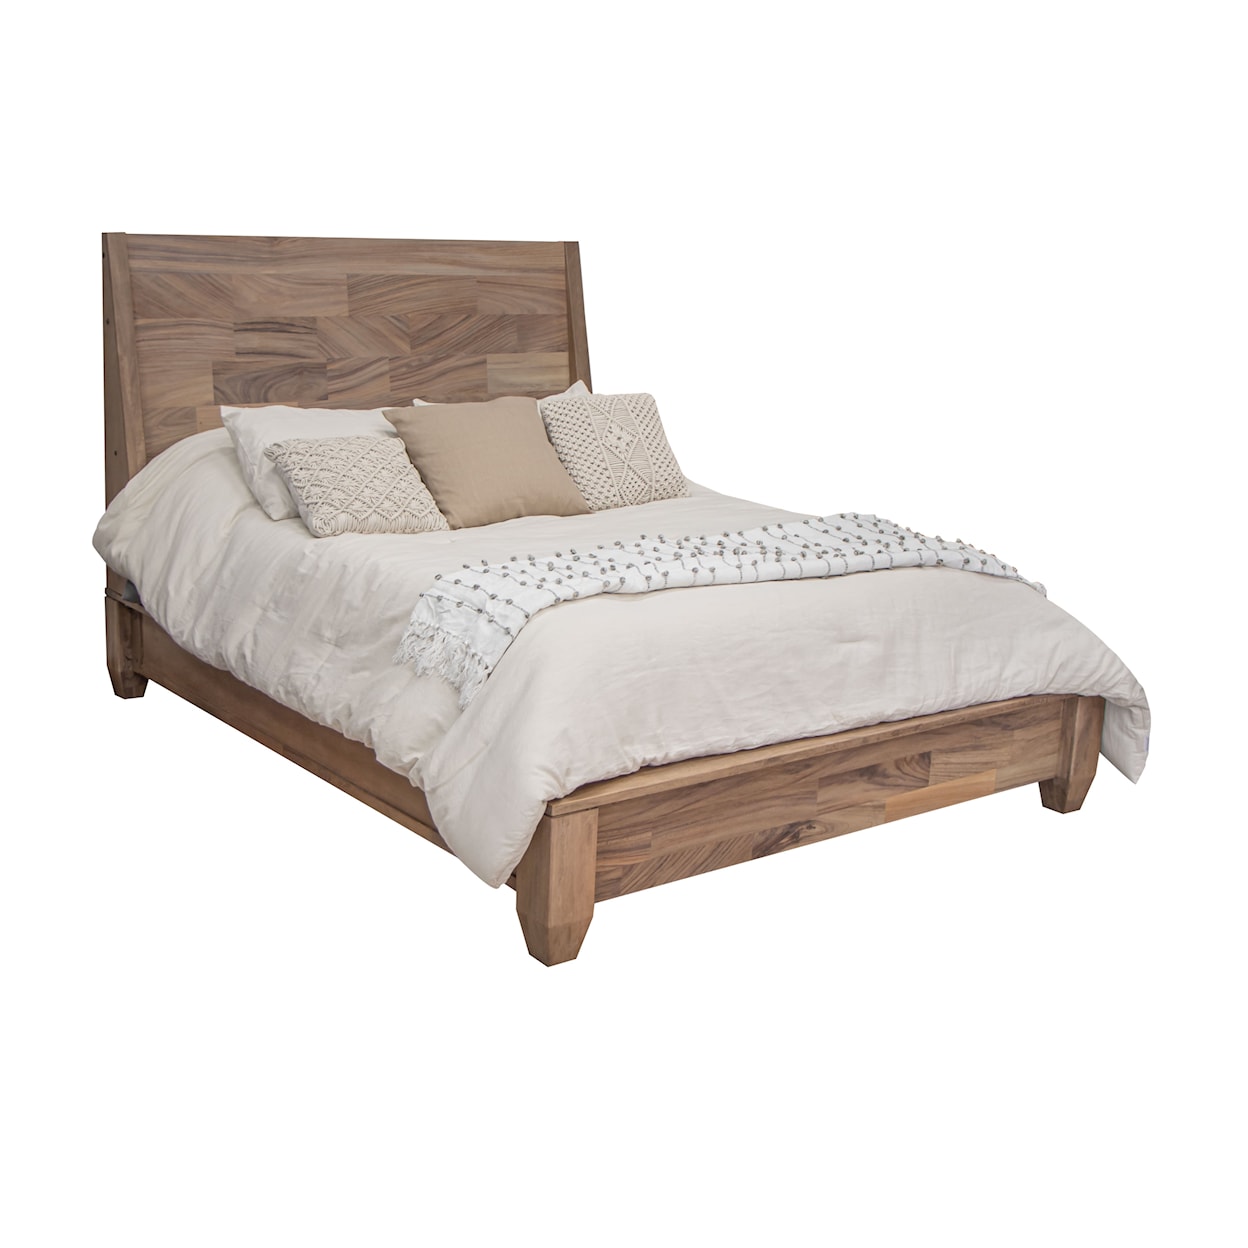 International Furniture Direct Parota Nova Queen Platform Bed